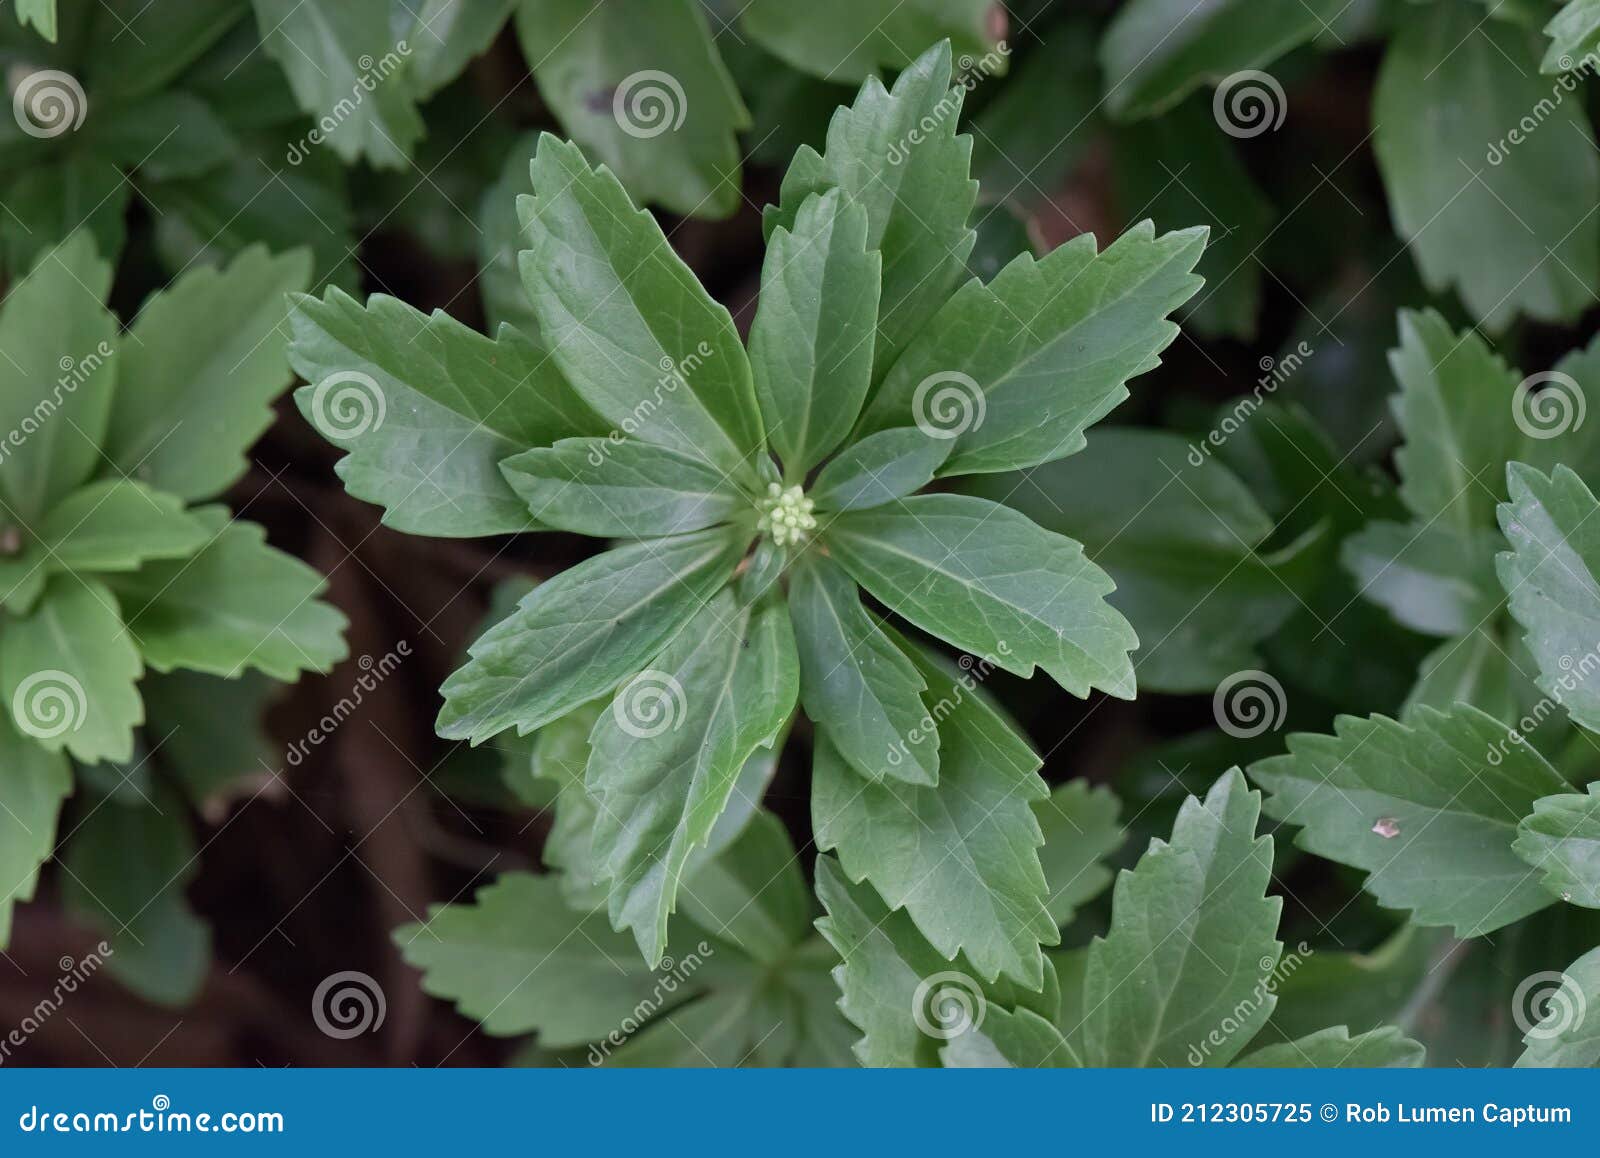 Japanese Pachysandra Terminalis Leaf Wreath Stock Image Image Of Spreading Leaf